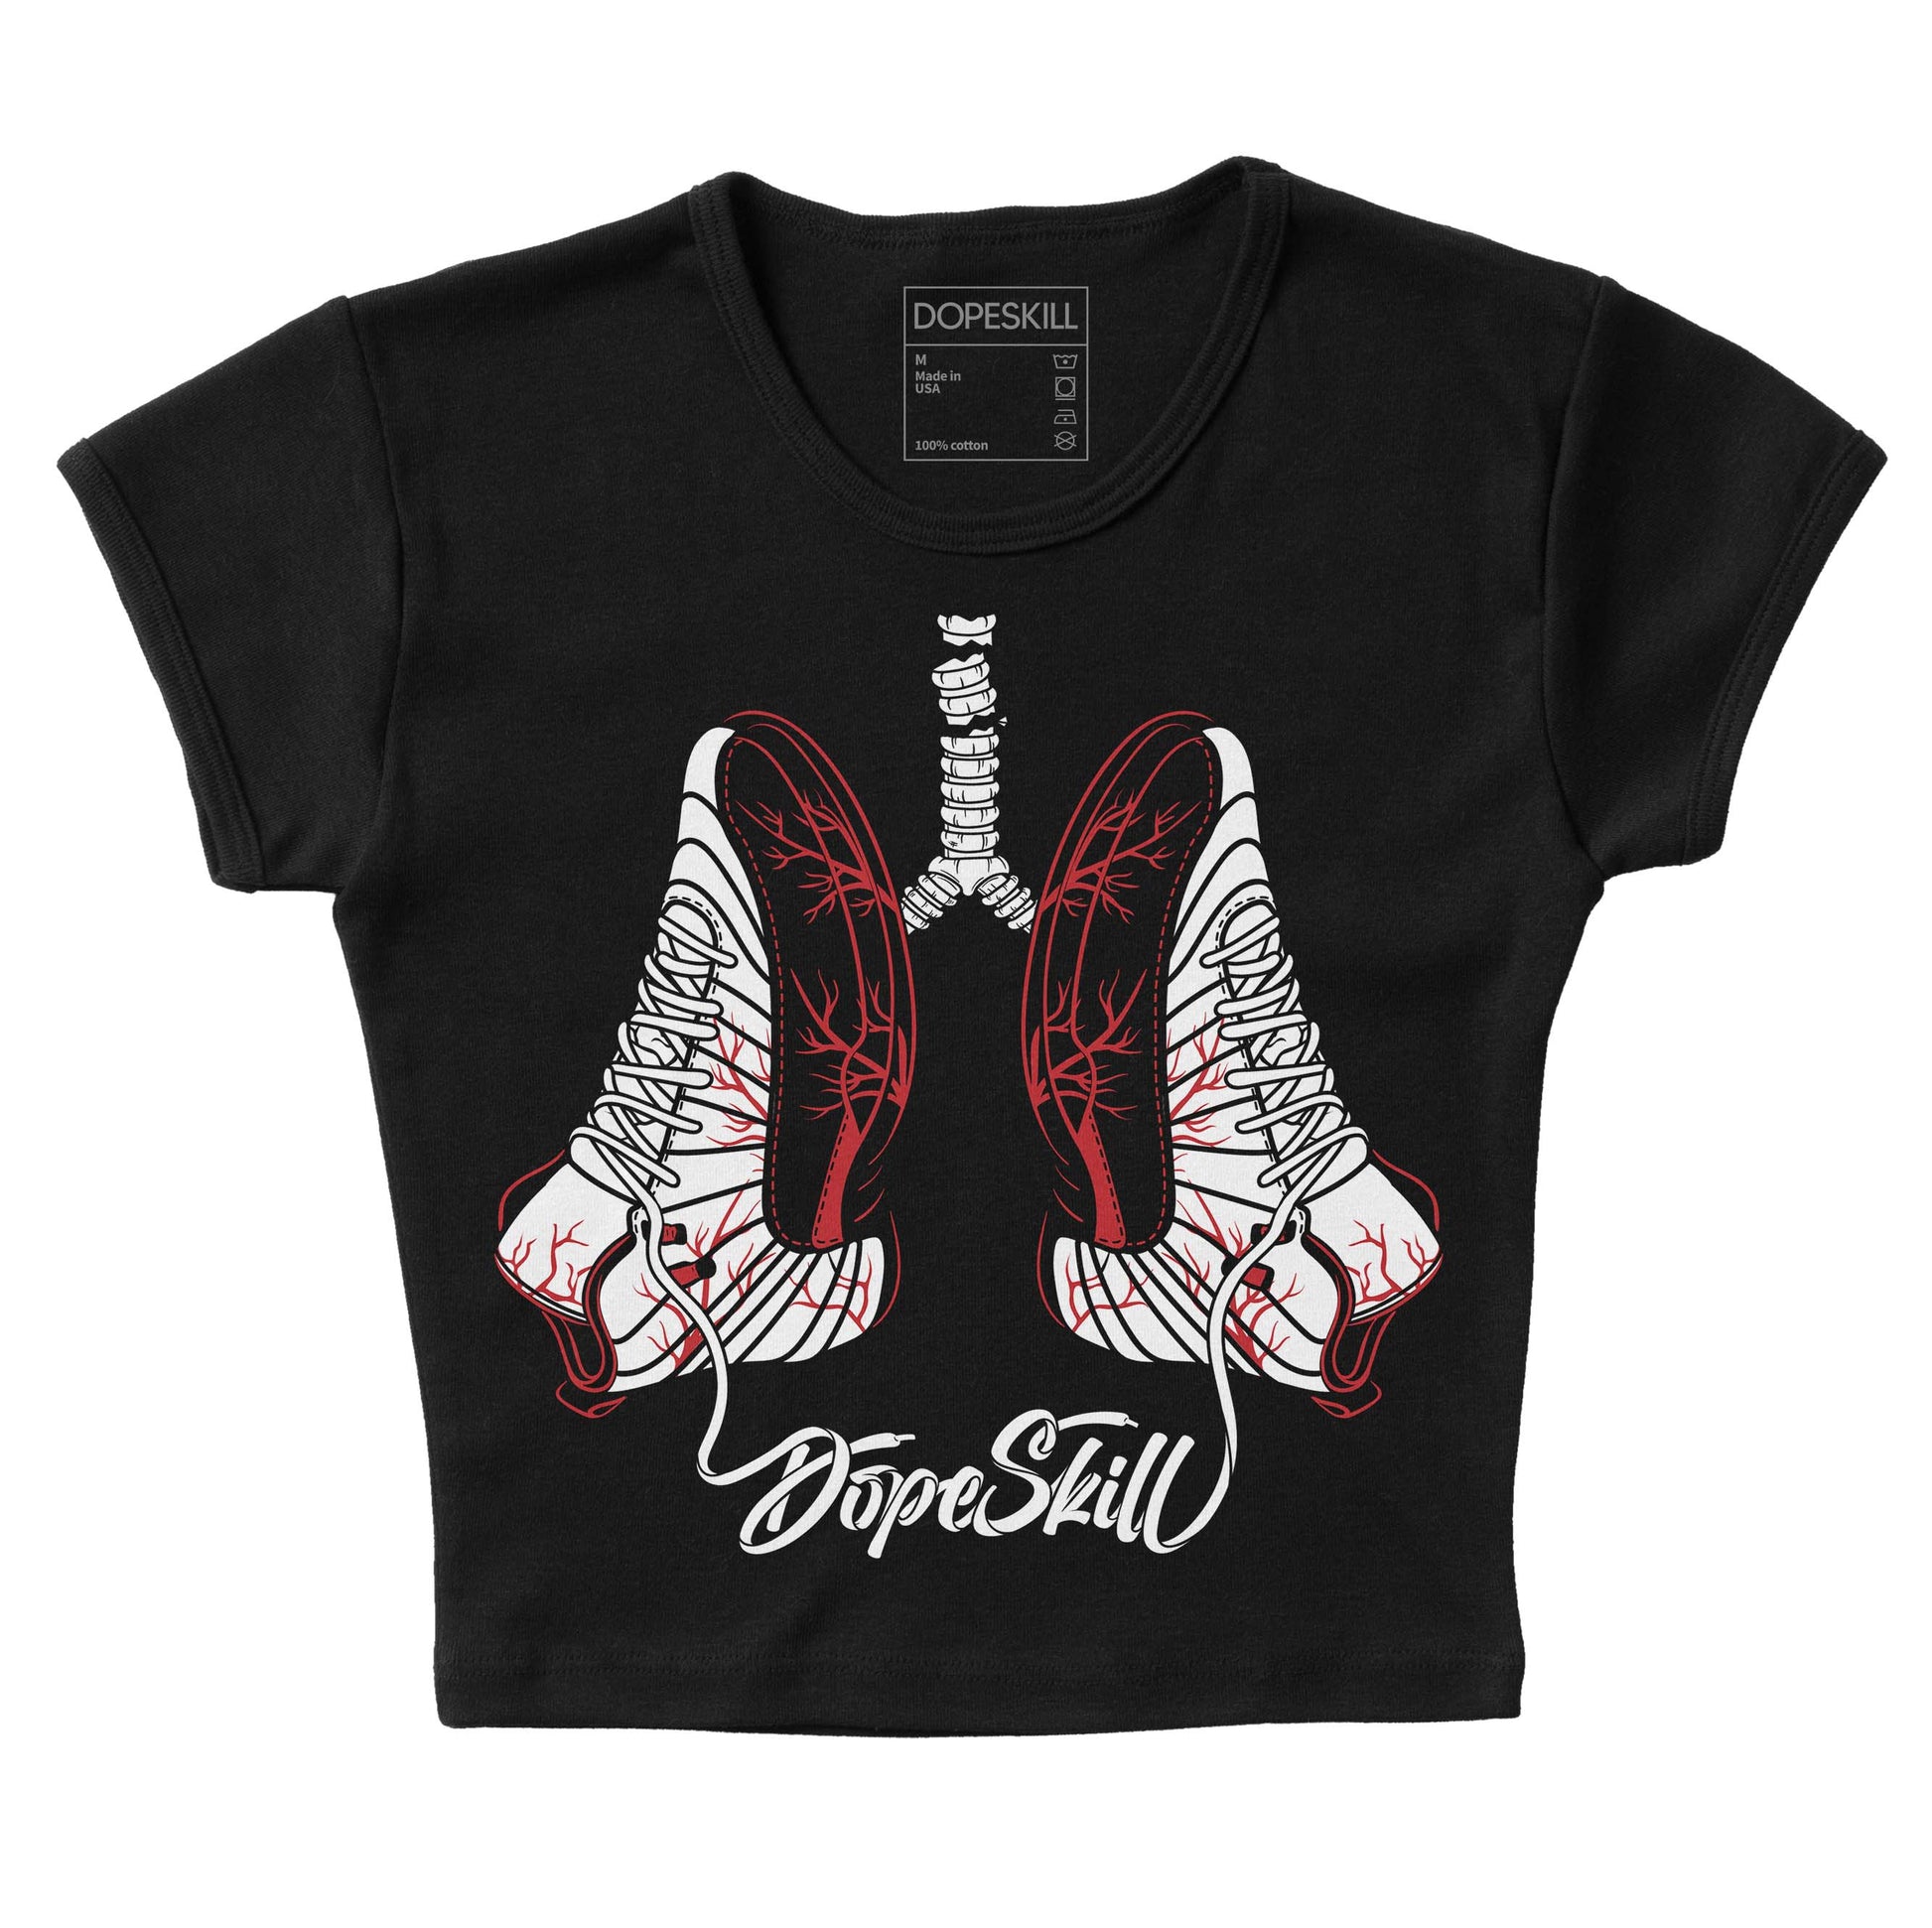 Jordan 12 “Red Taxi” DopeSkill Women's Crop Top Breathe Graphic Streetwear - Black